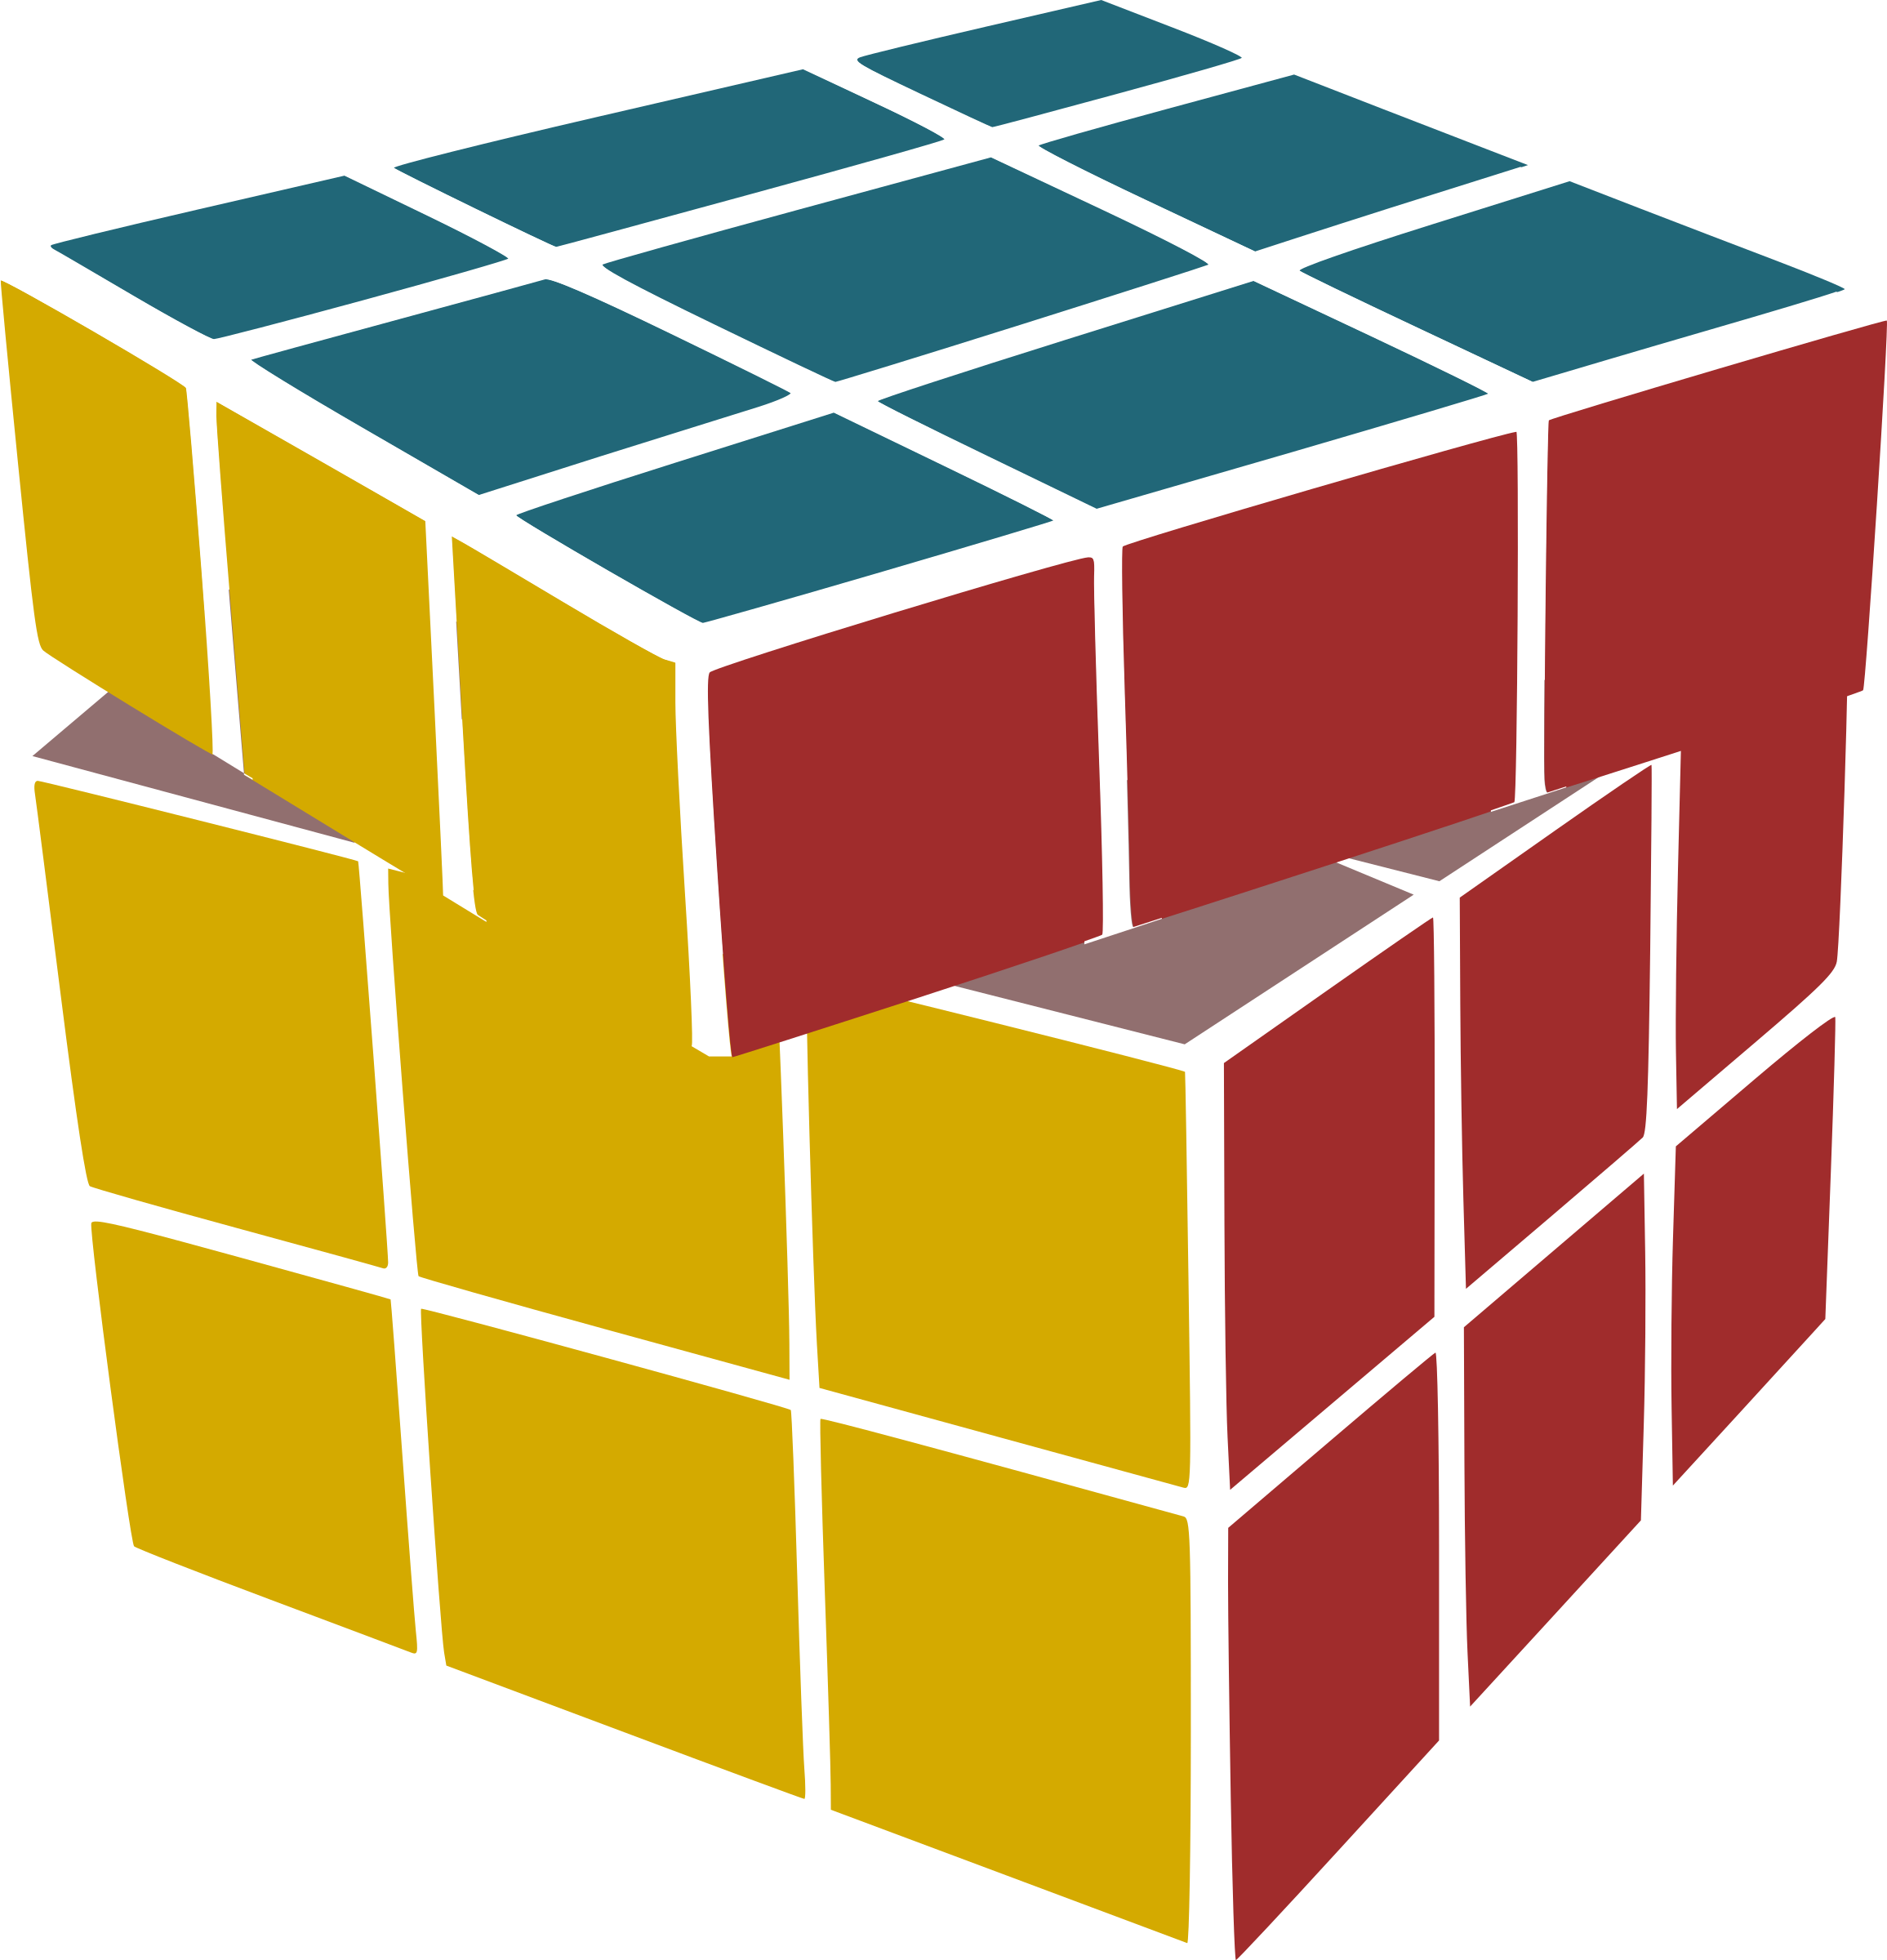 Inspiration Rubix Cube Clip Art Medium Size - Inspiration Rubix Cube Clip Art Medium Size (2311x2400)